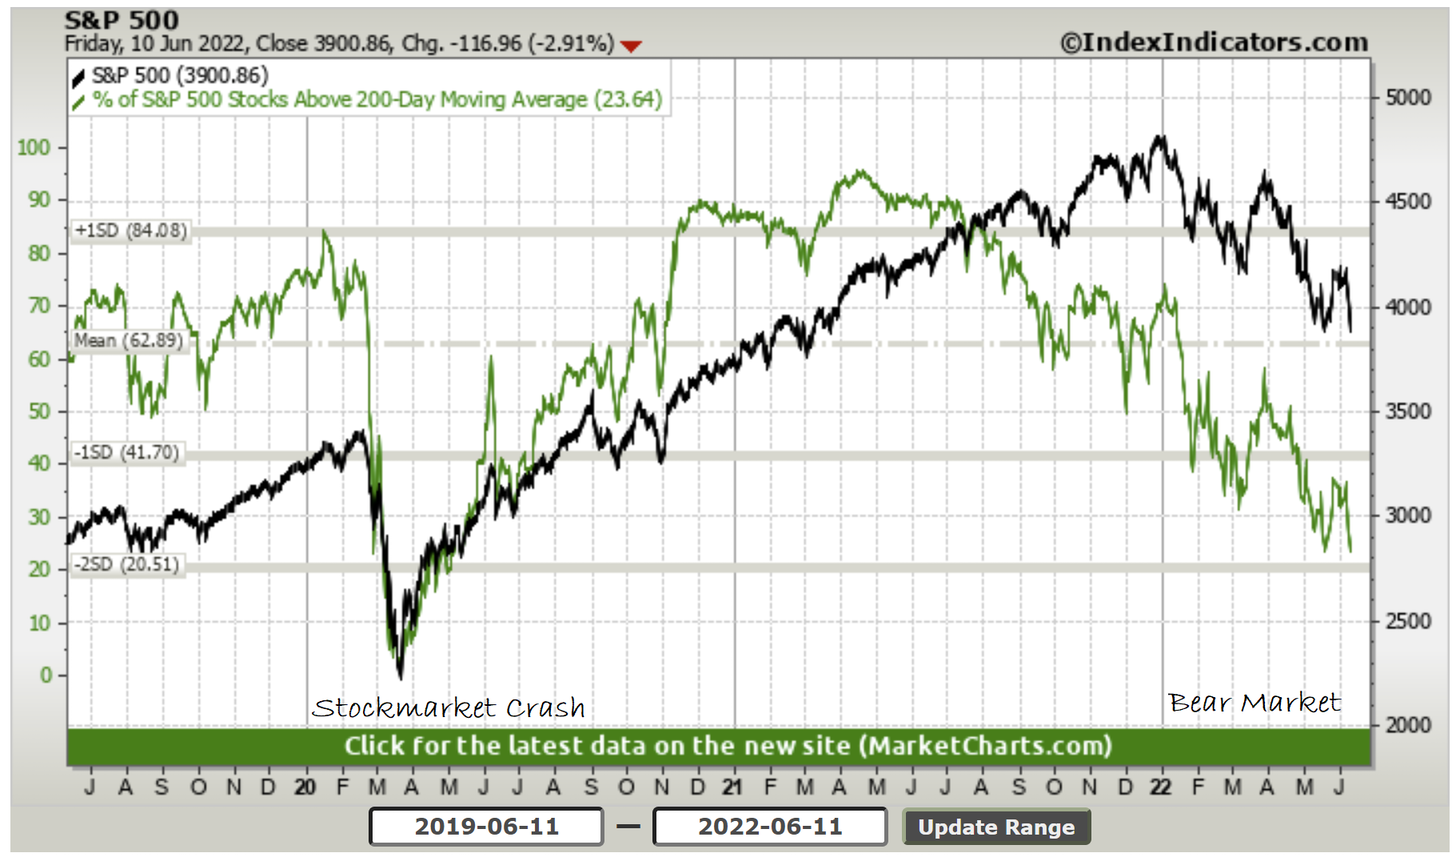 S&P 500 - Bear Market Vs Market Crash